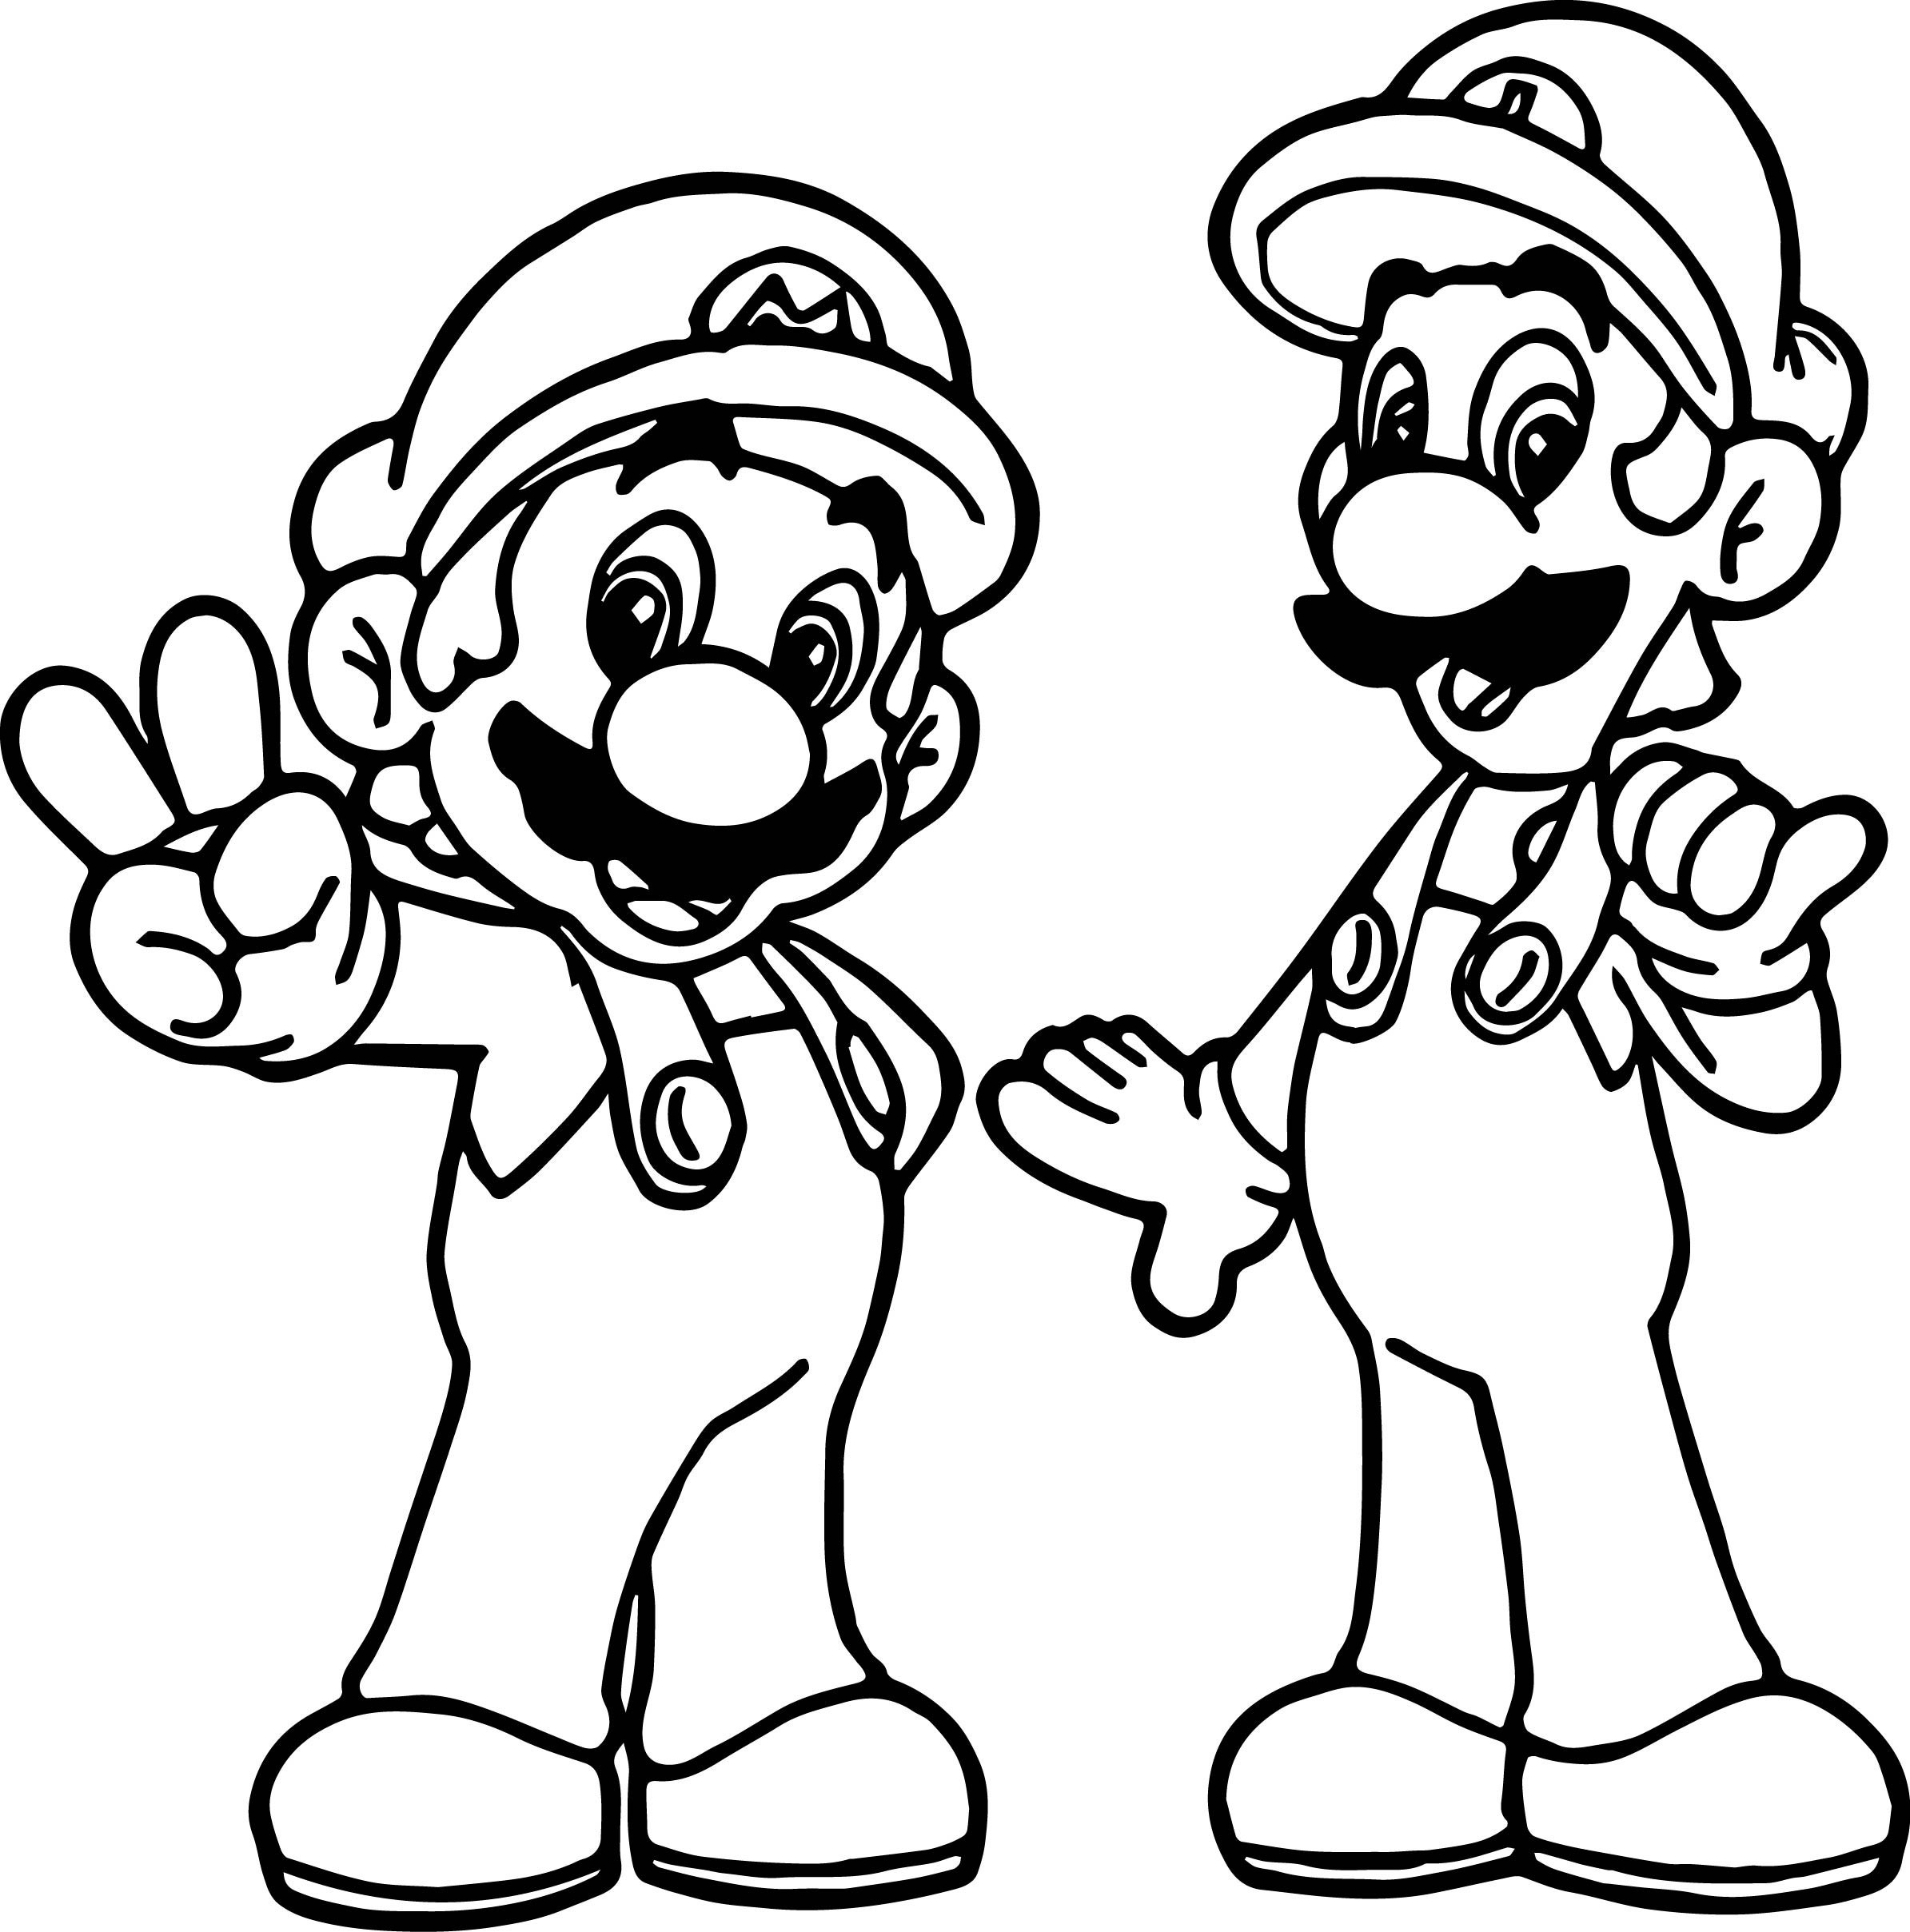 Mario And Luigi Coloring Pages At Getdrawings | Free Download encequiconcerne Coloriage Luigi